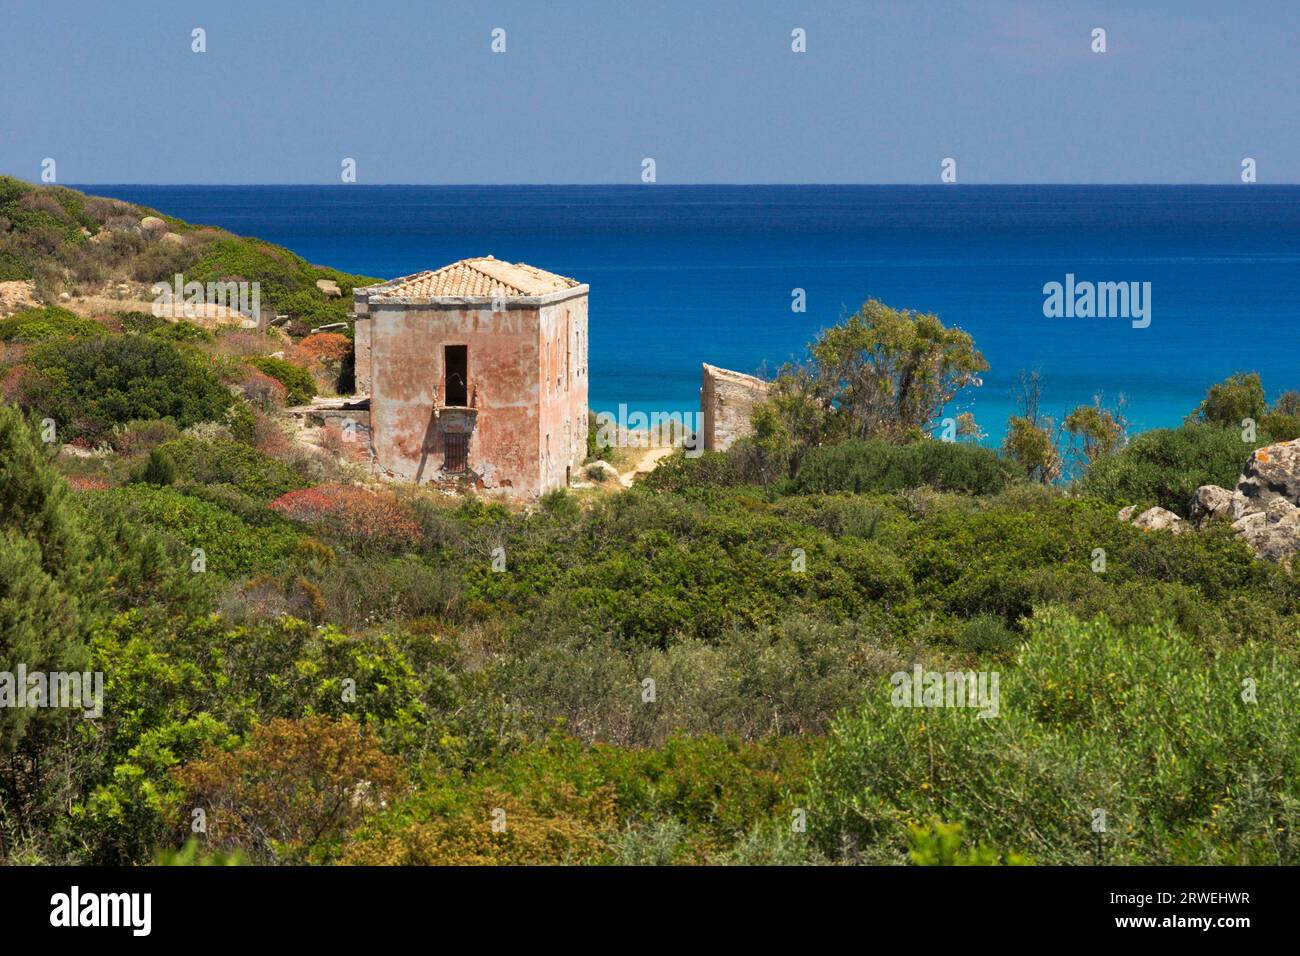 Dilapidated house on the beach near Villasimius Stock Photo